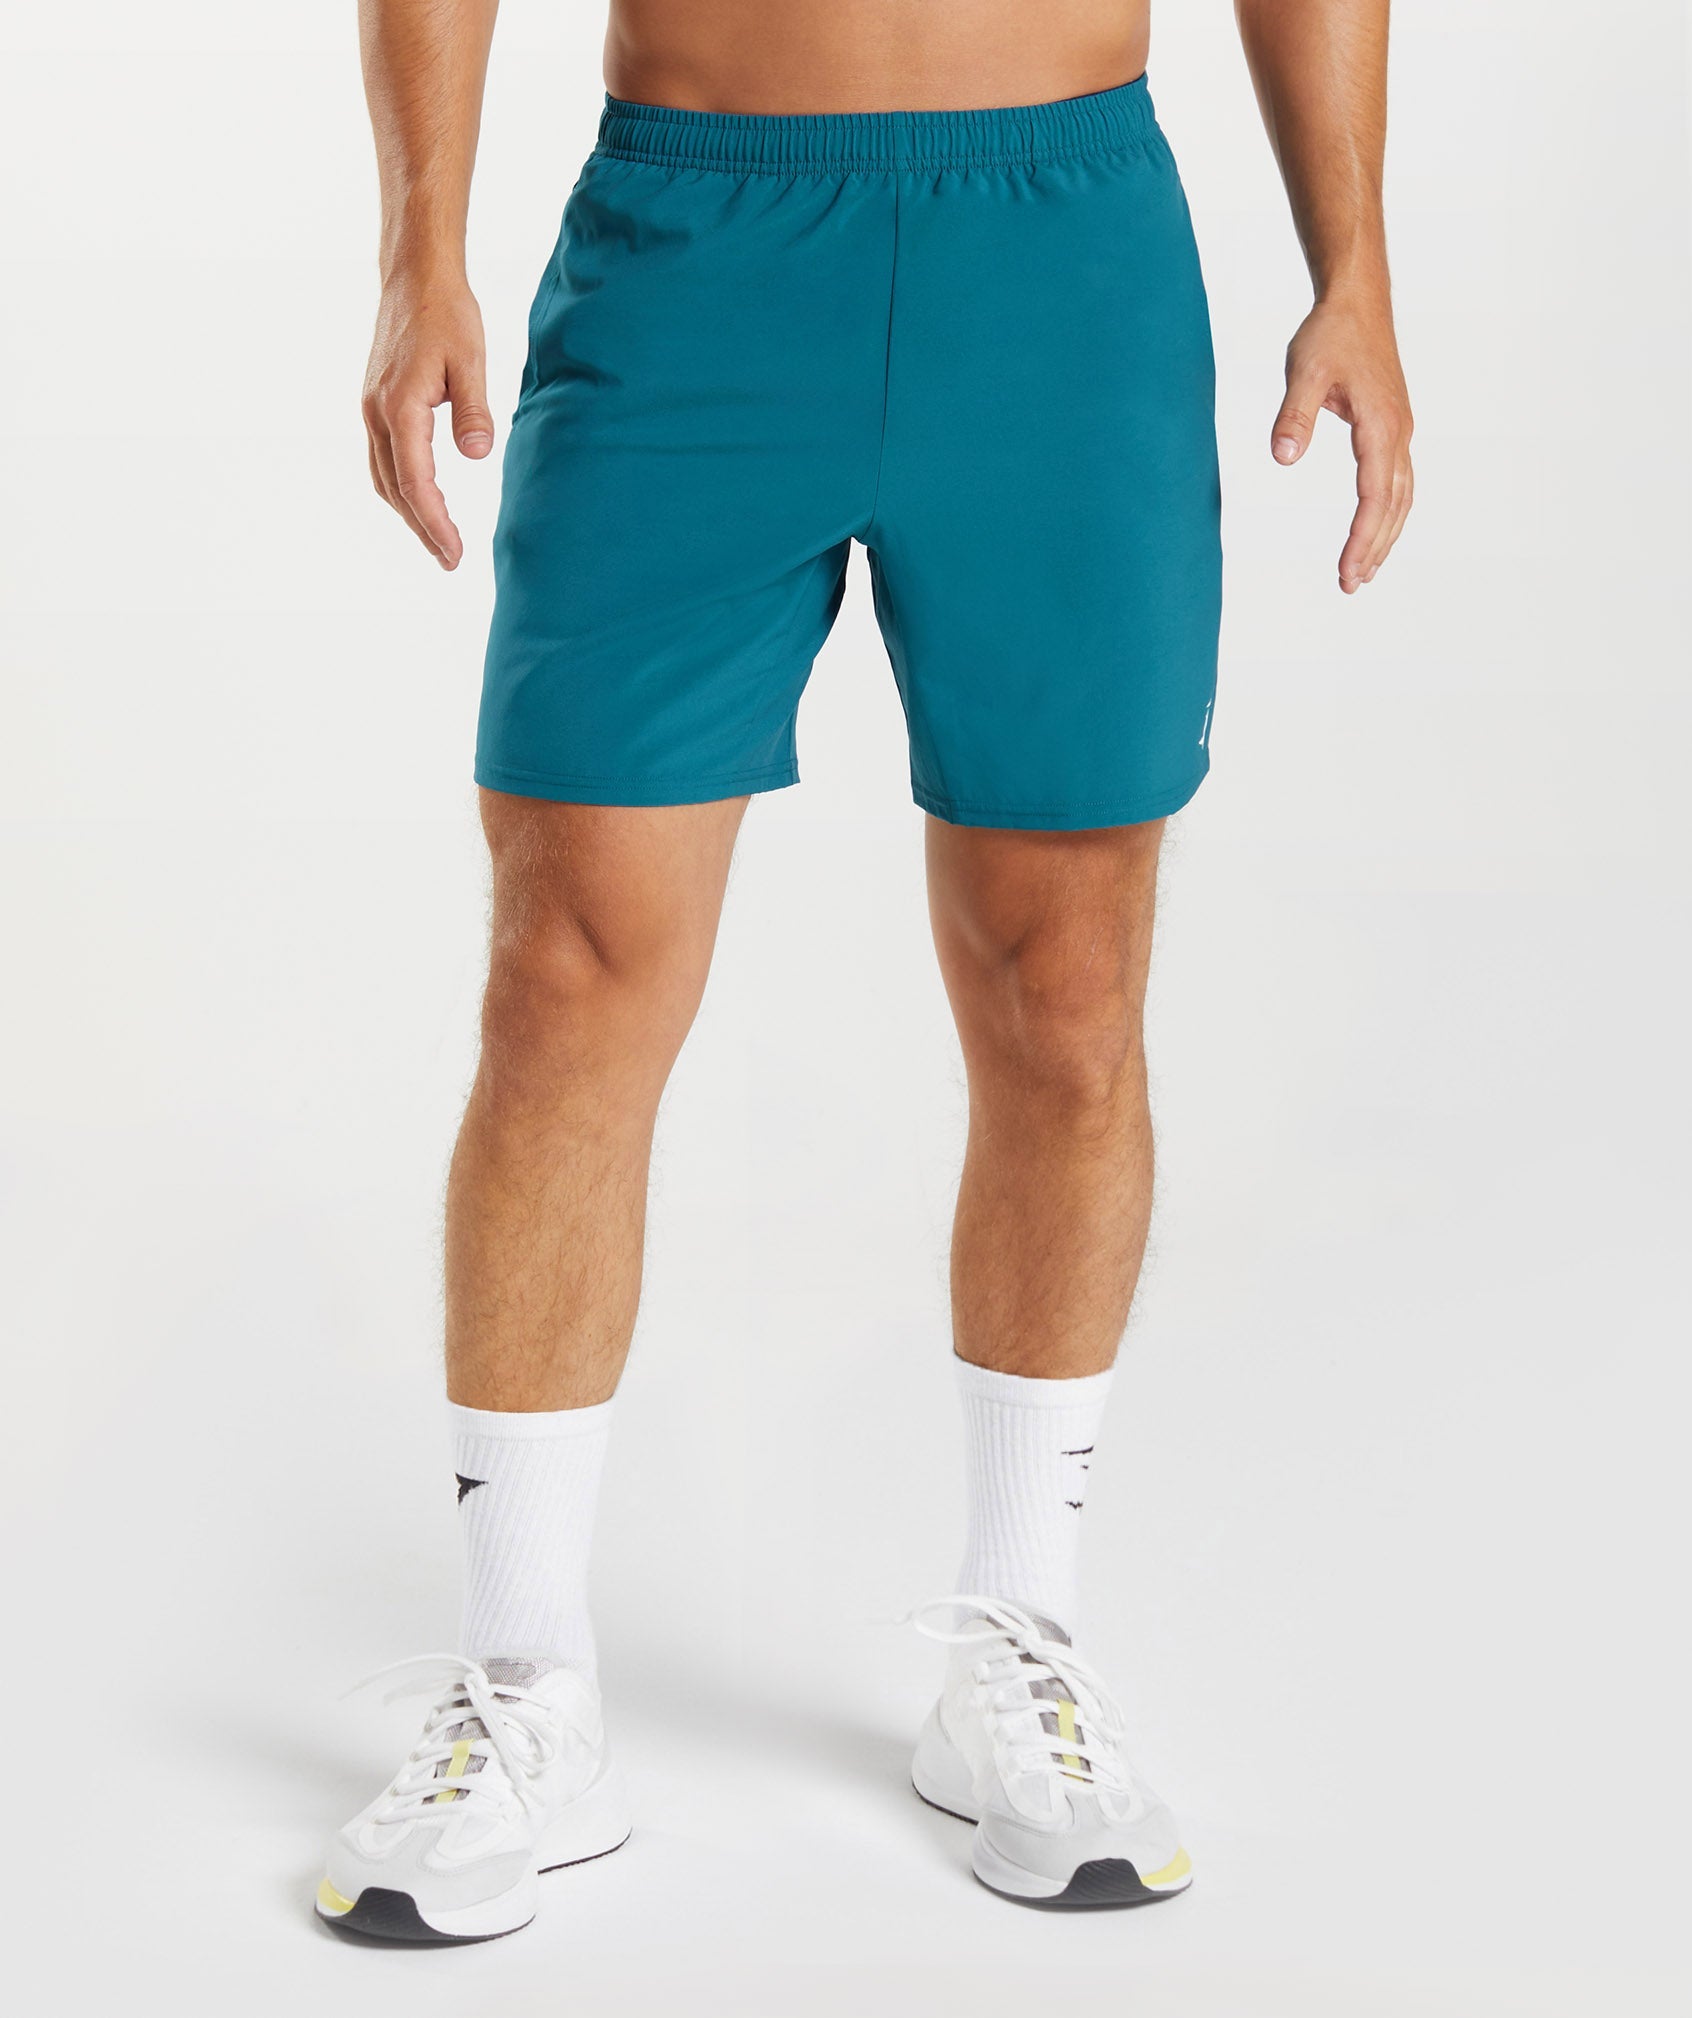 Gymshark Arrival 5 Shorts - Utility Blue